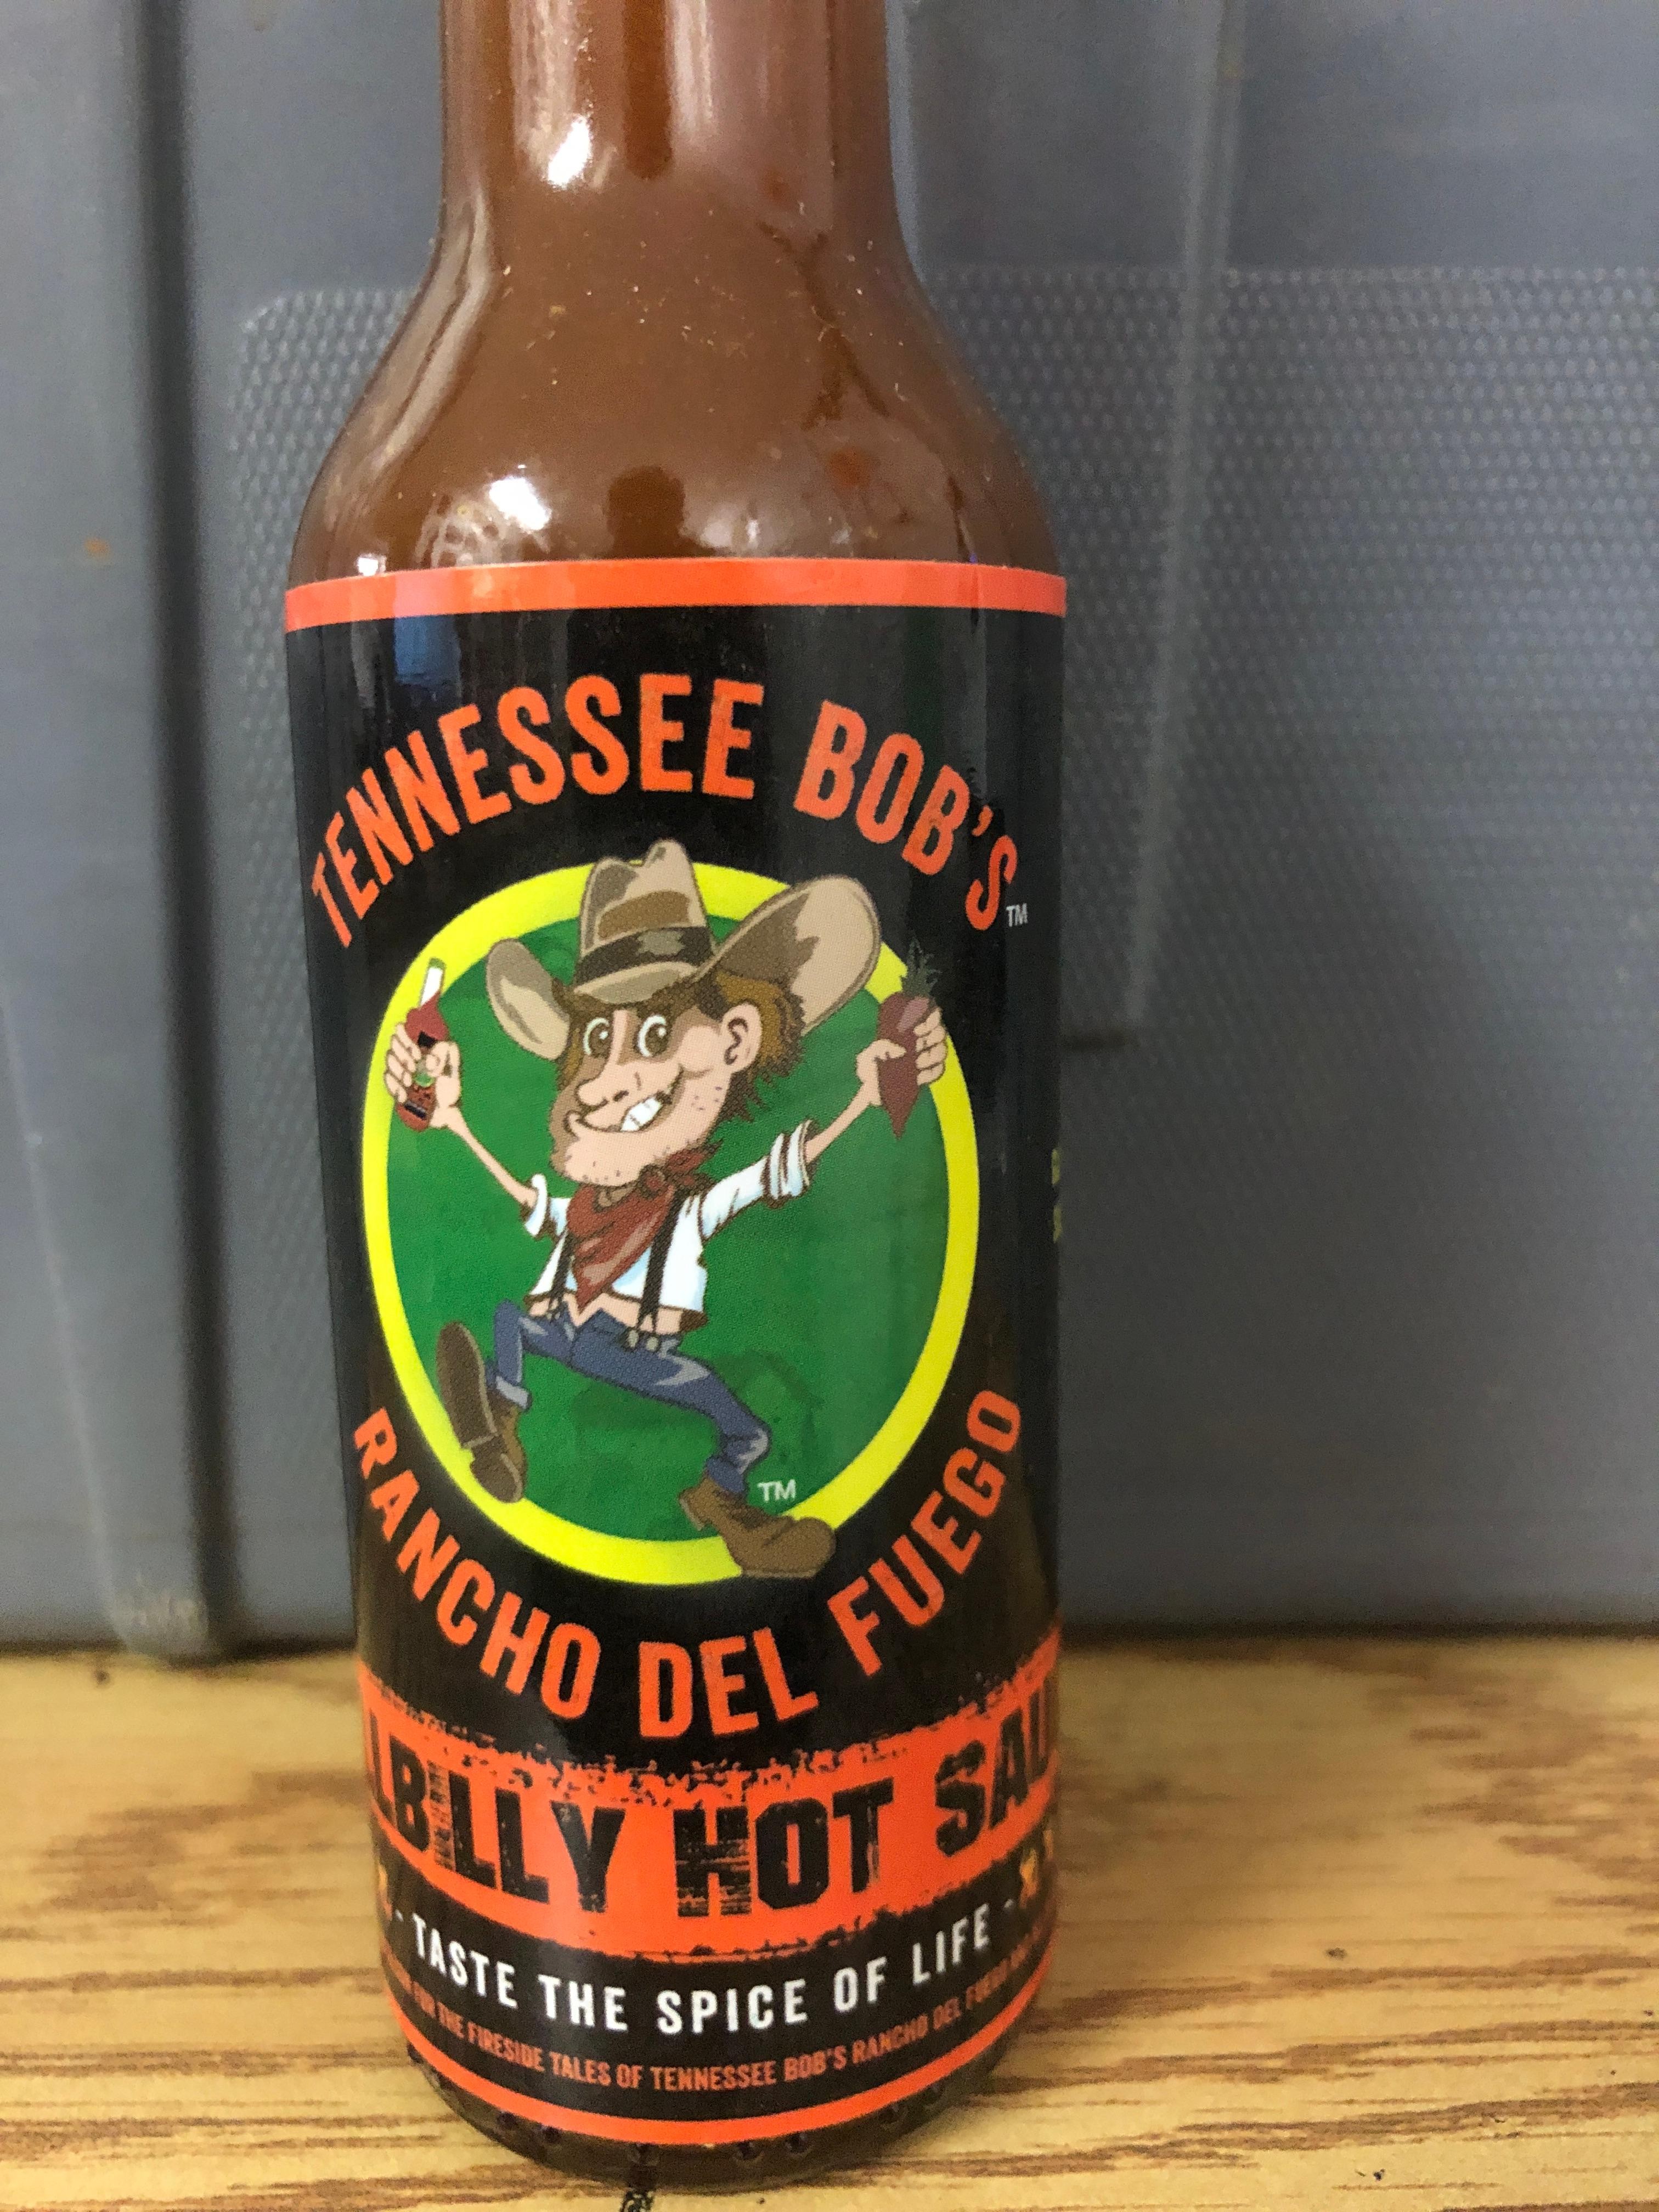 Tennessee Bob’s Hillbilly Hot Sauce